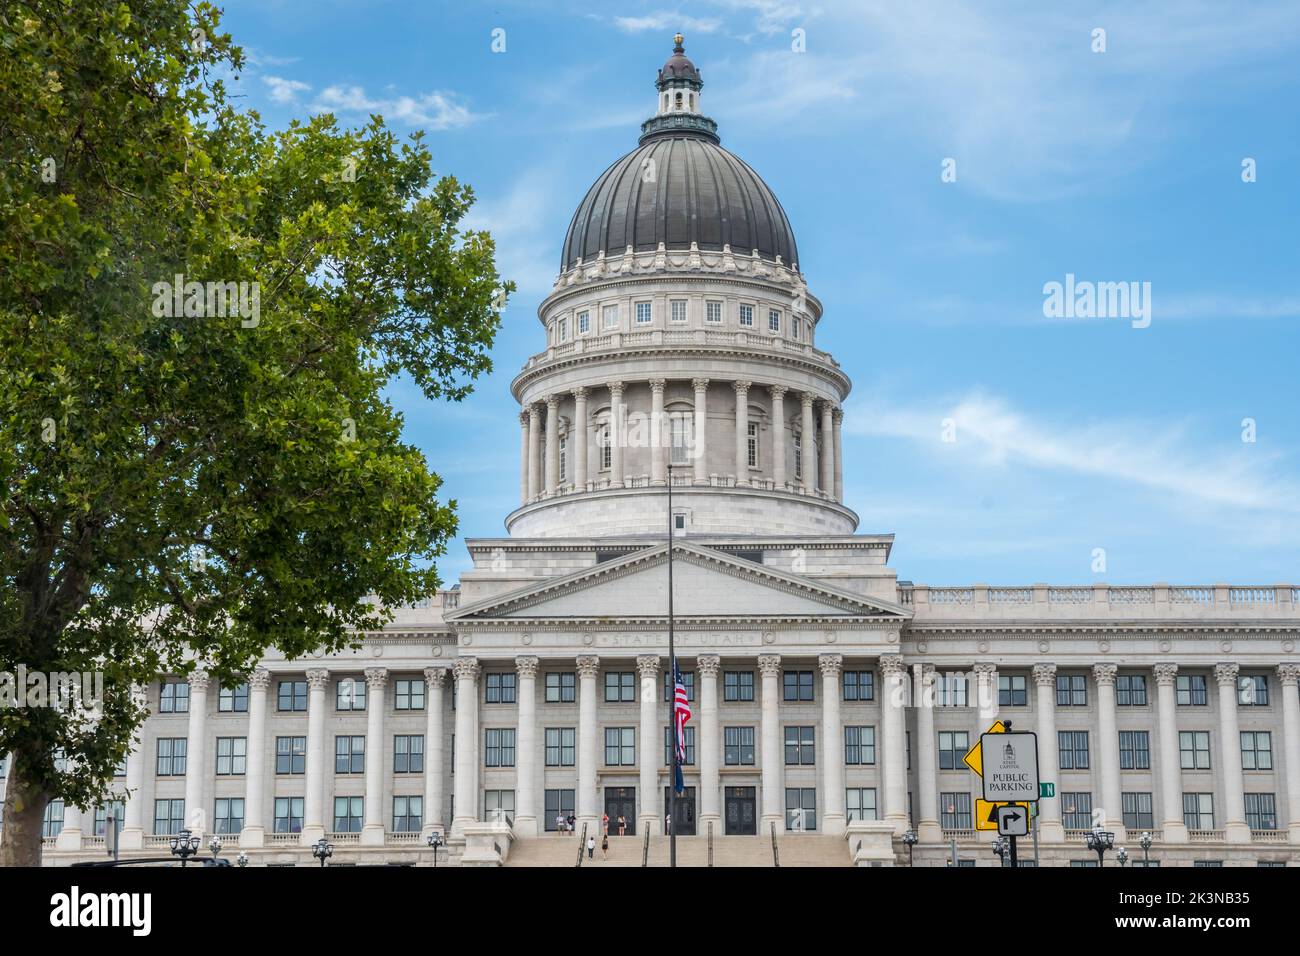 Das Verwaltungszentrum in Salt Lake City, Utah Stockfoto